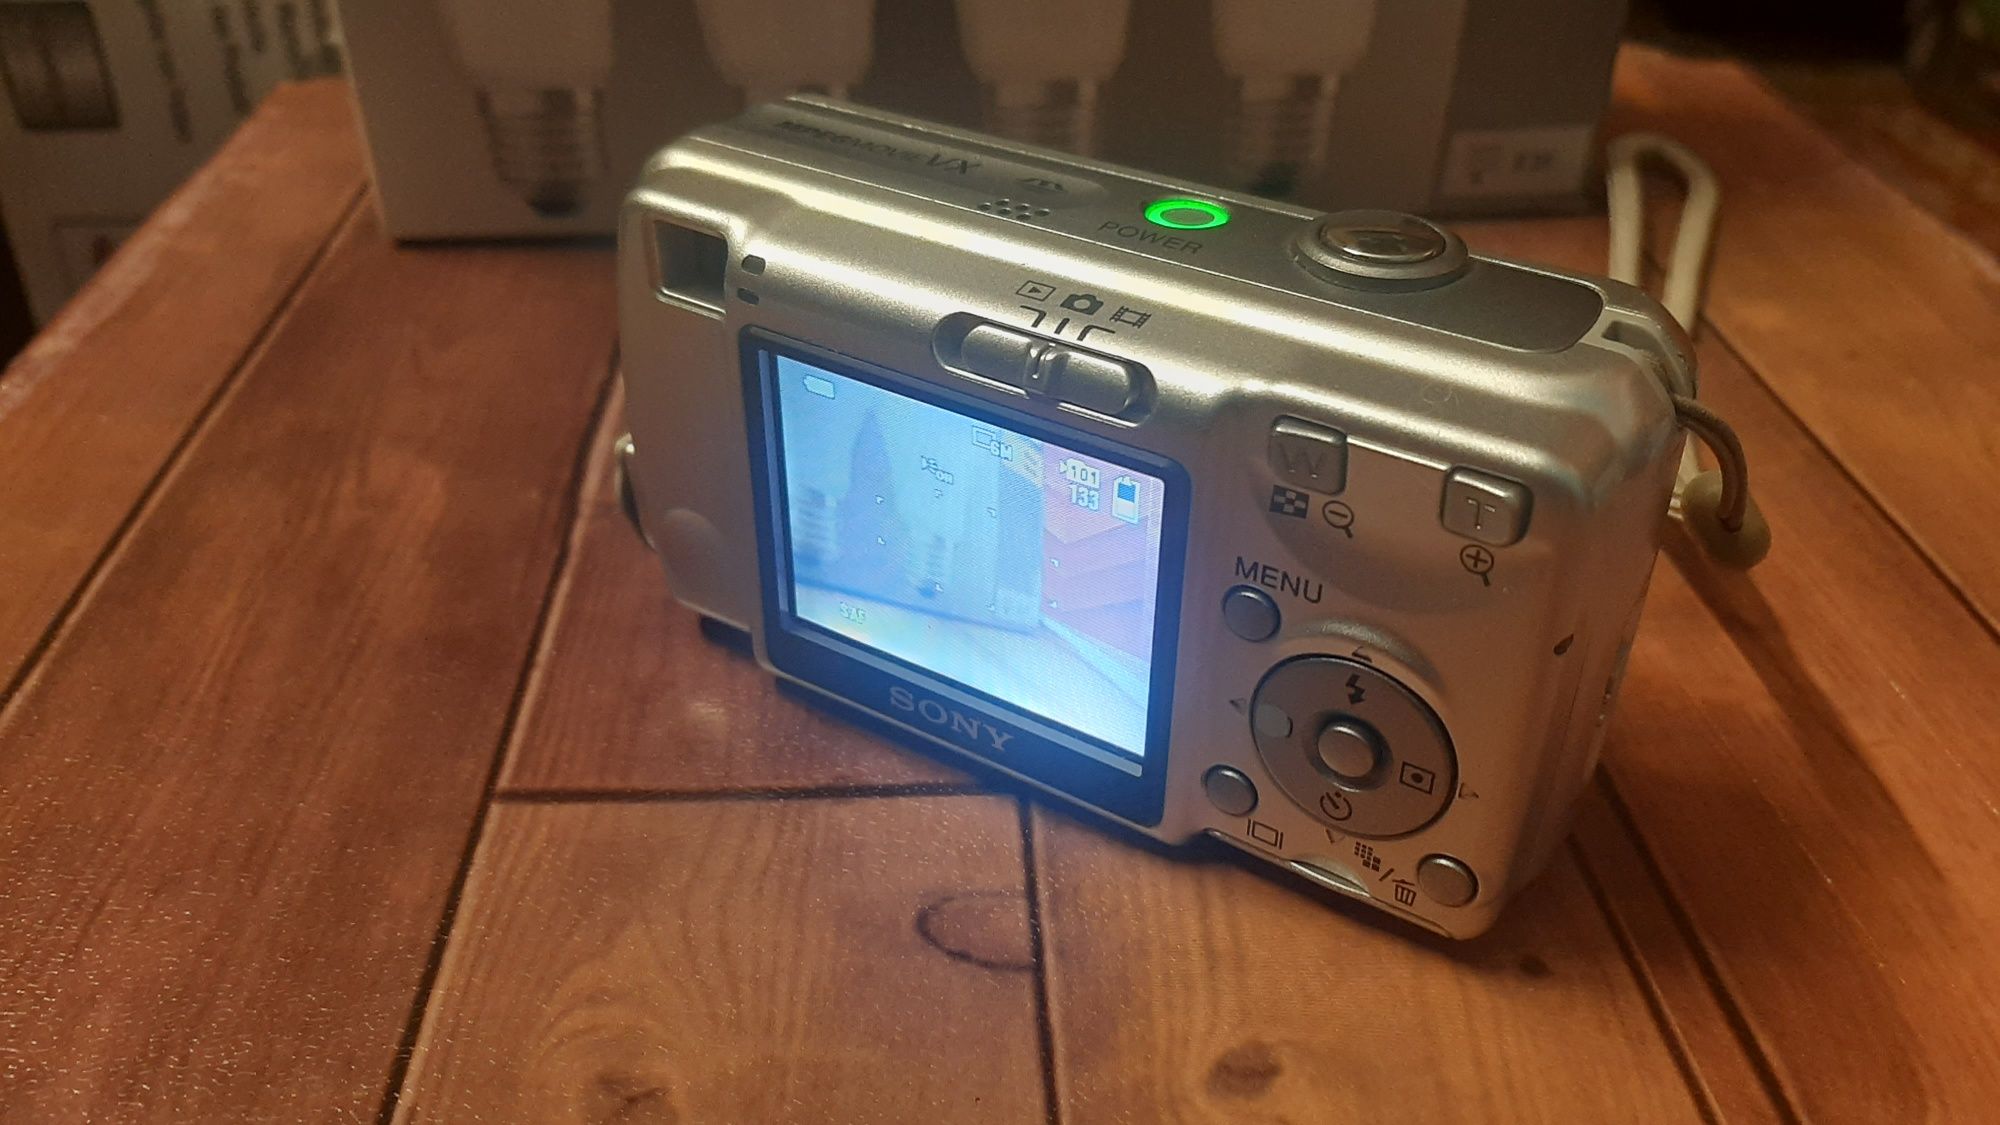 Camera SONY DSC-S600